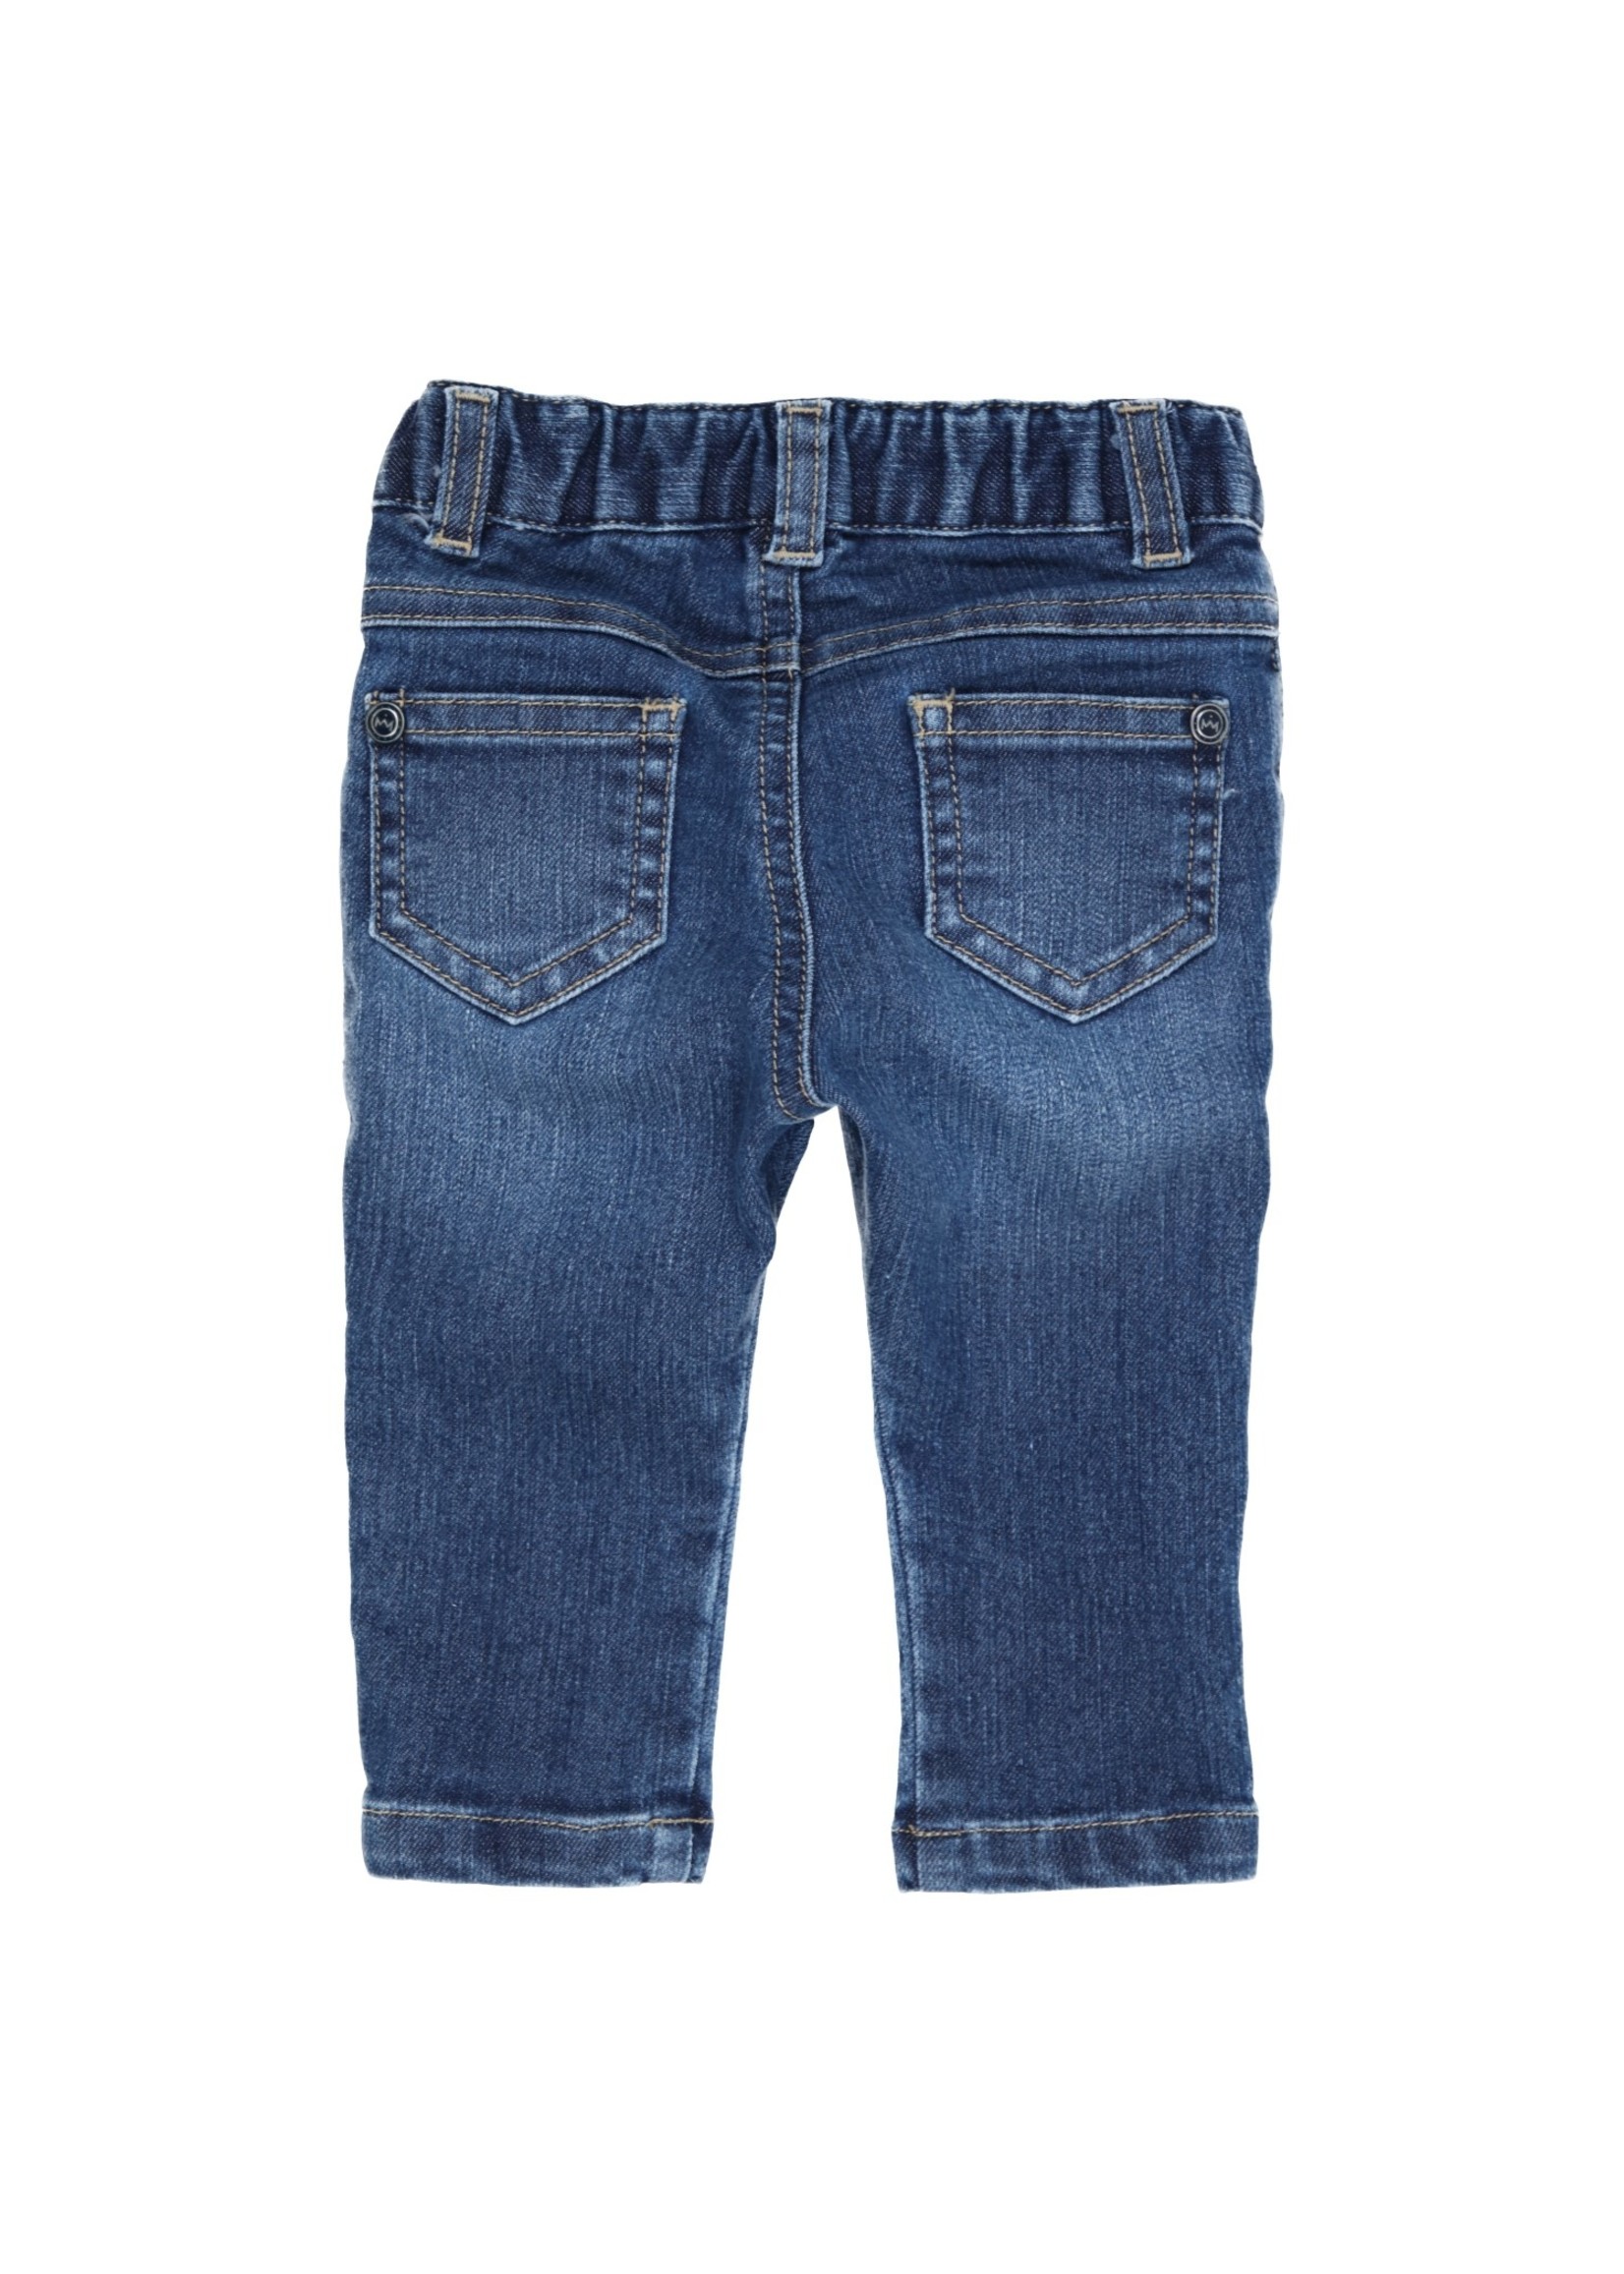 Gymp pants 5 pocket blue